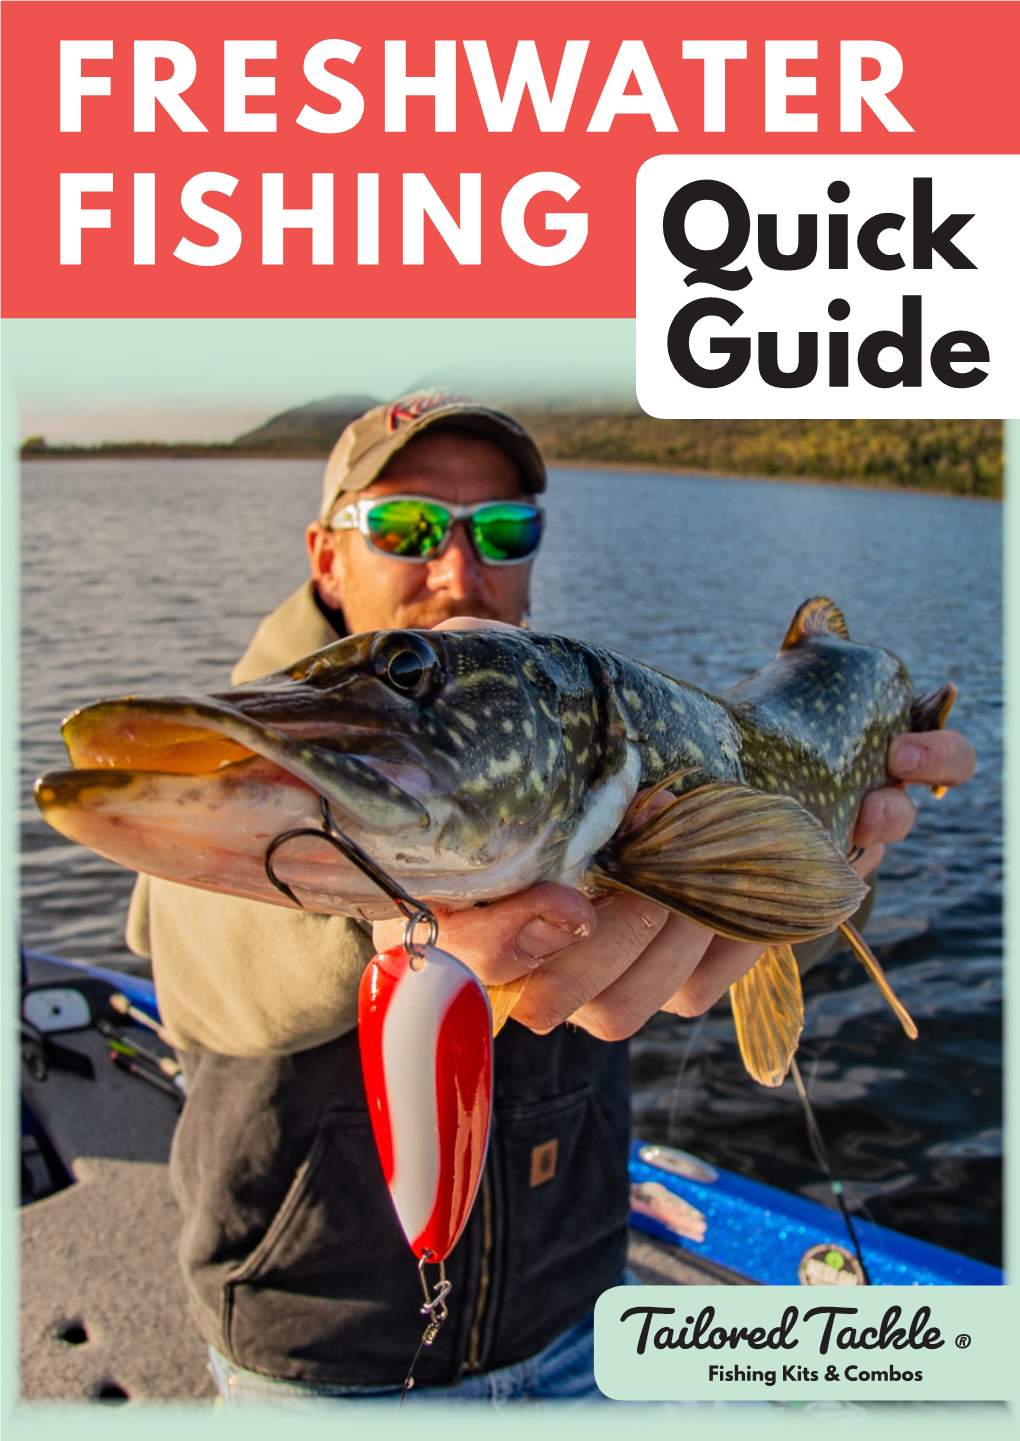 FRESHWATER FISHING Quick Guide